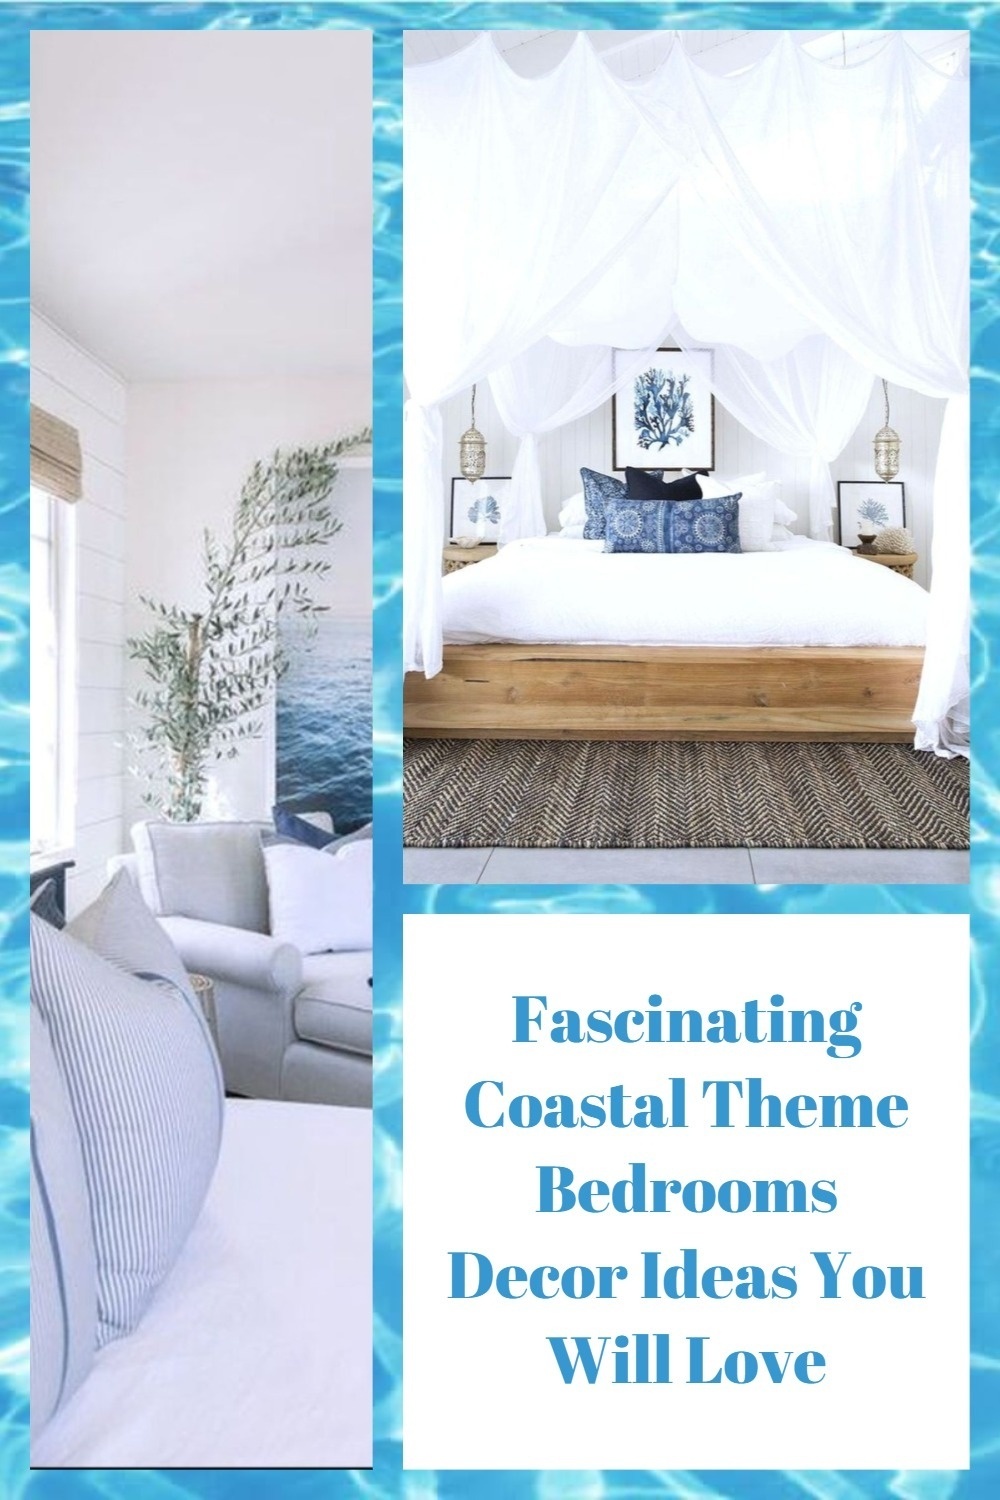 Fascinating Coastal Theme Bedrooms Decor Ideas You Will Love